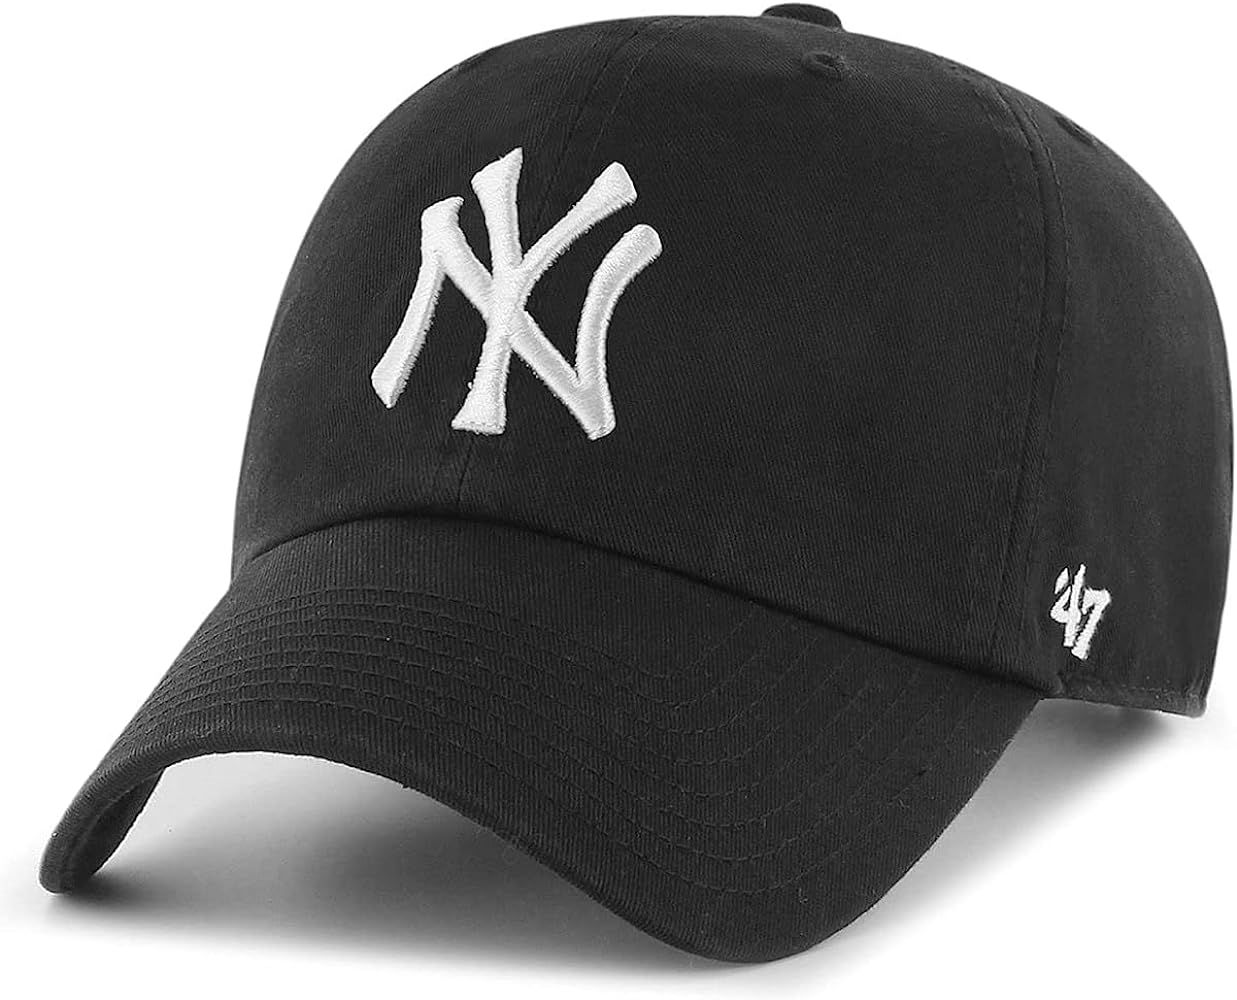 47 MLB Black White Clean Up Adjustable Hat Cap, Adult One Size (New York Yankees Black) | Amazon (US)